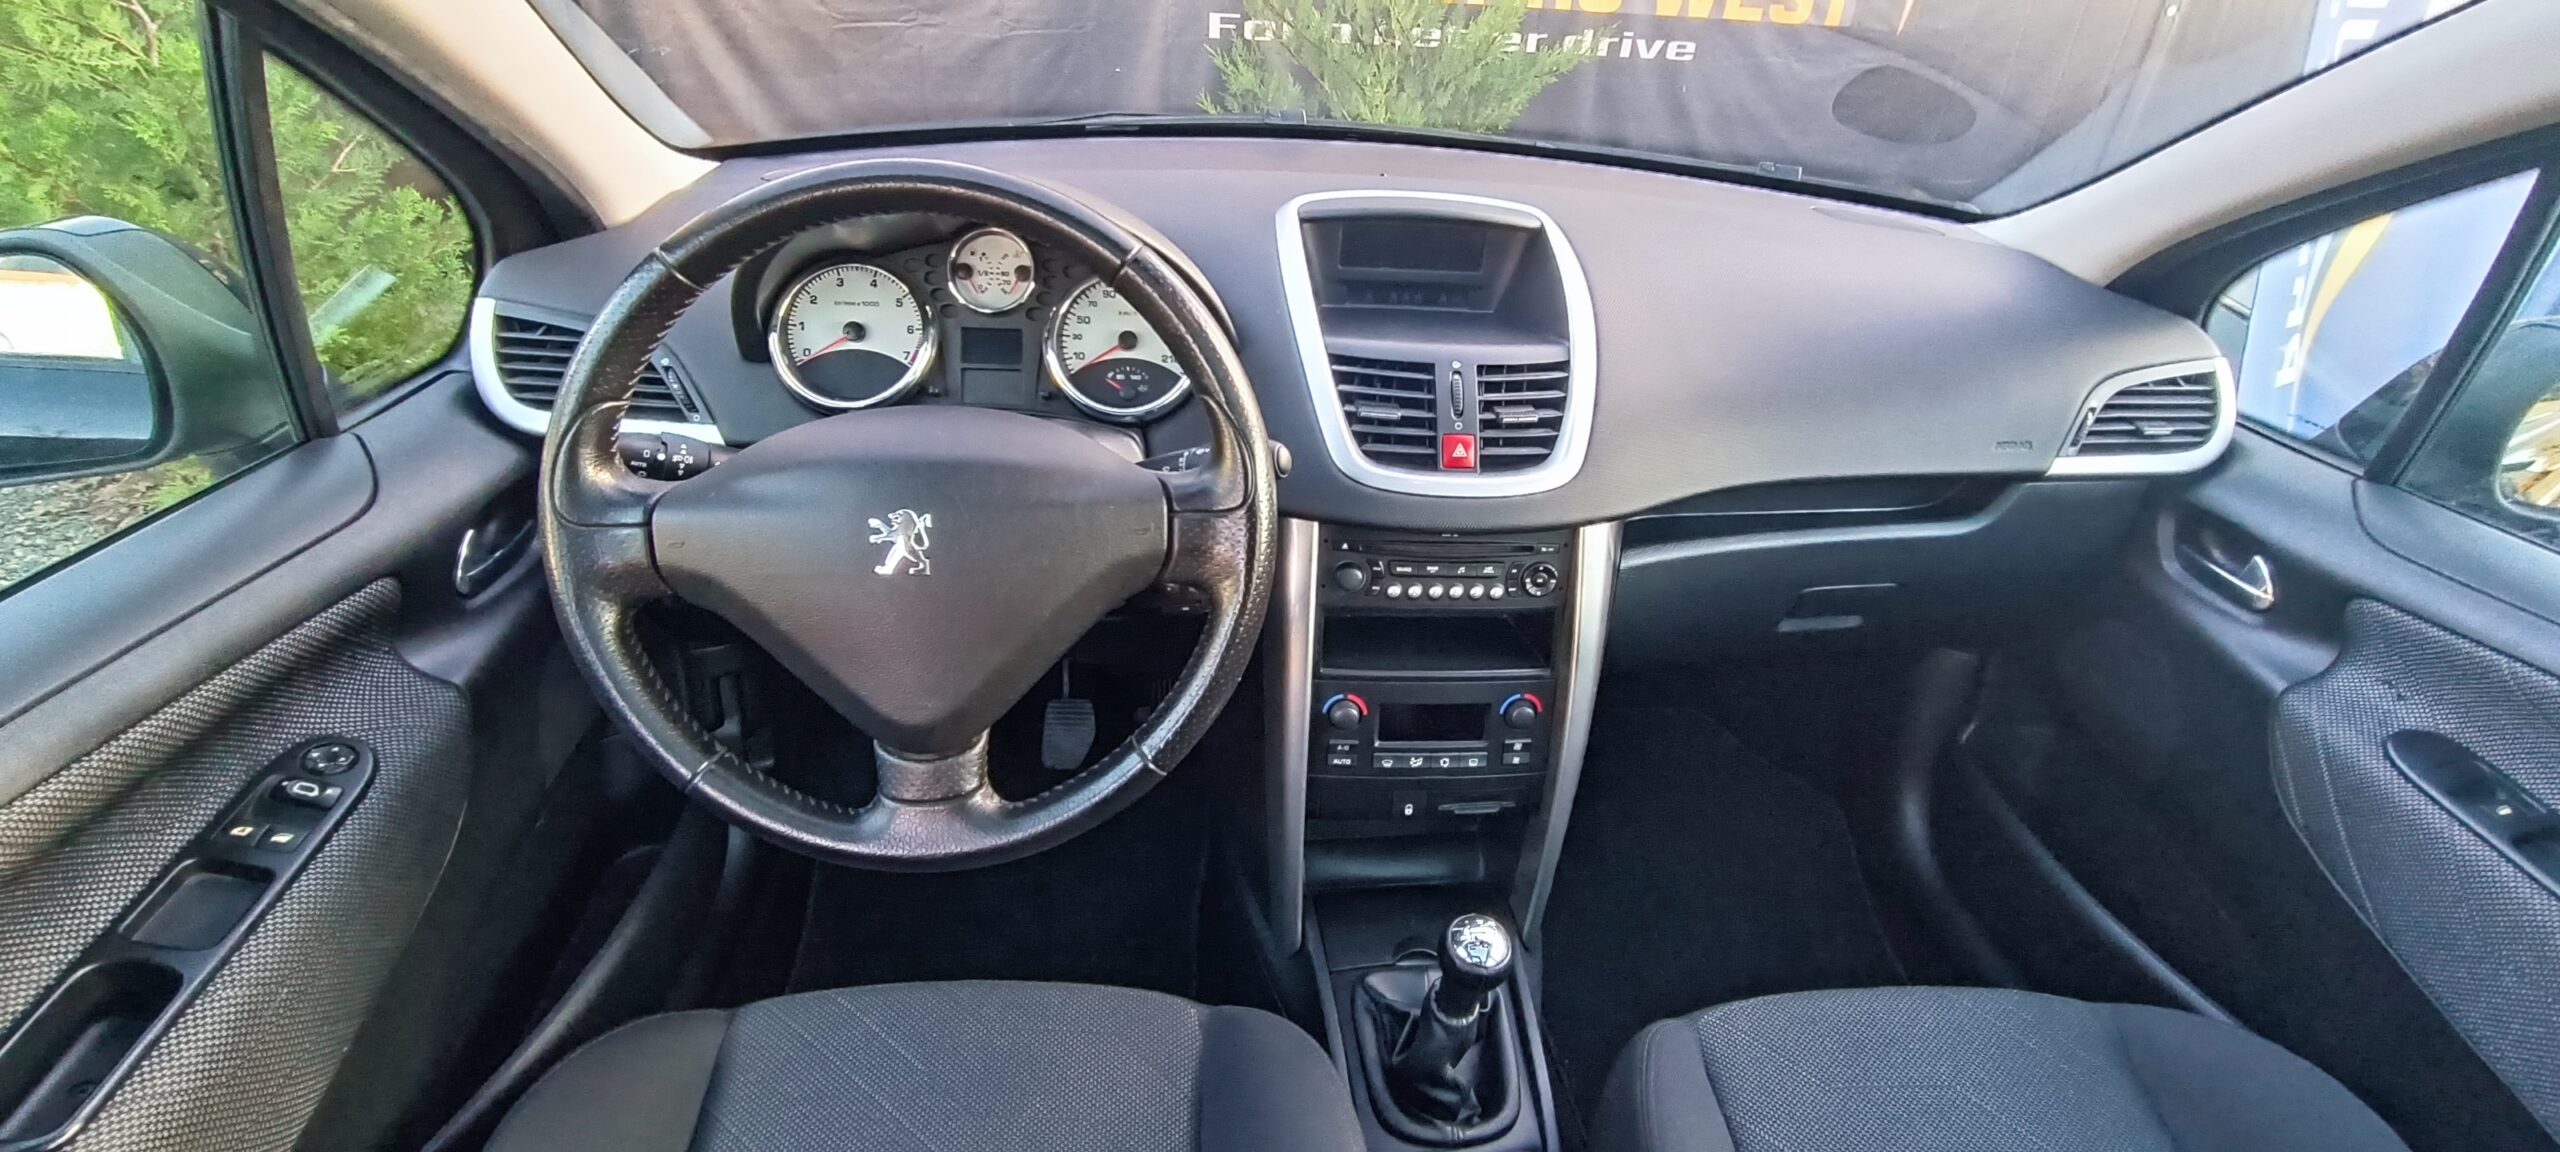 Peugeot 207 1.4 16v Benzina